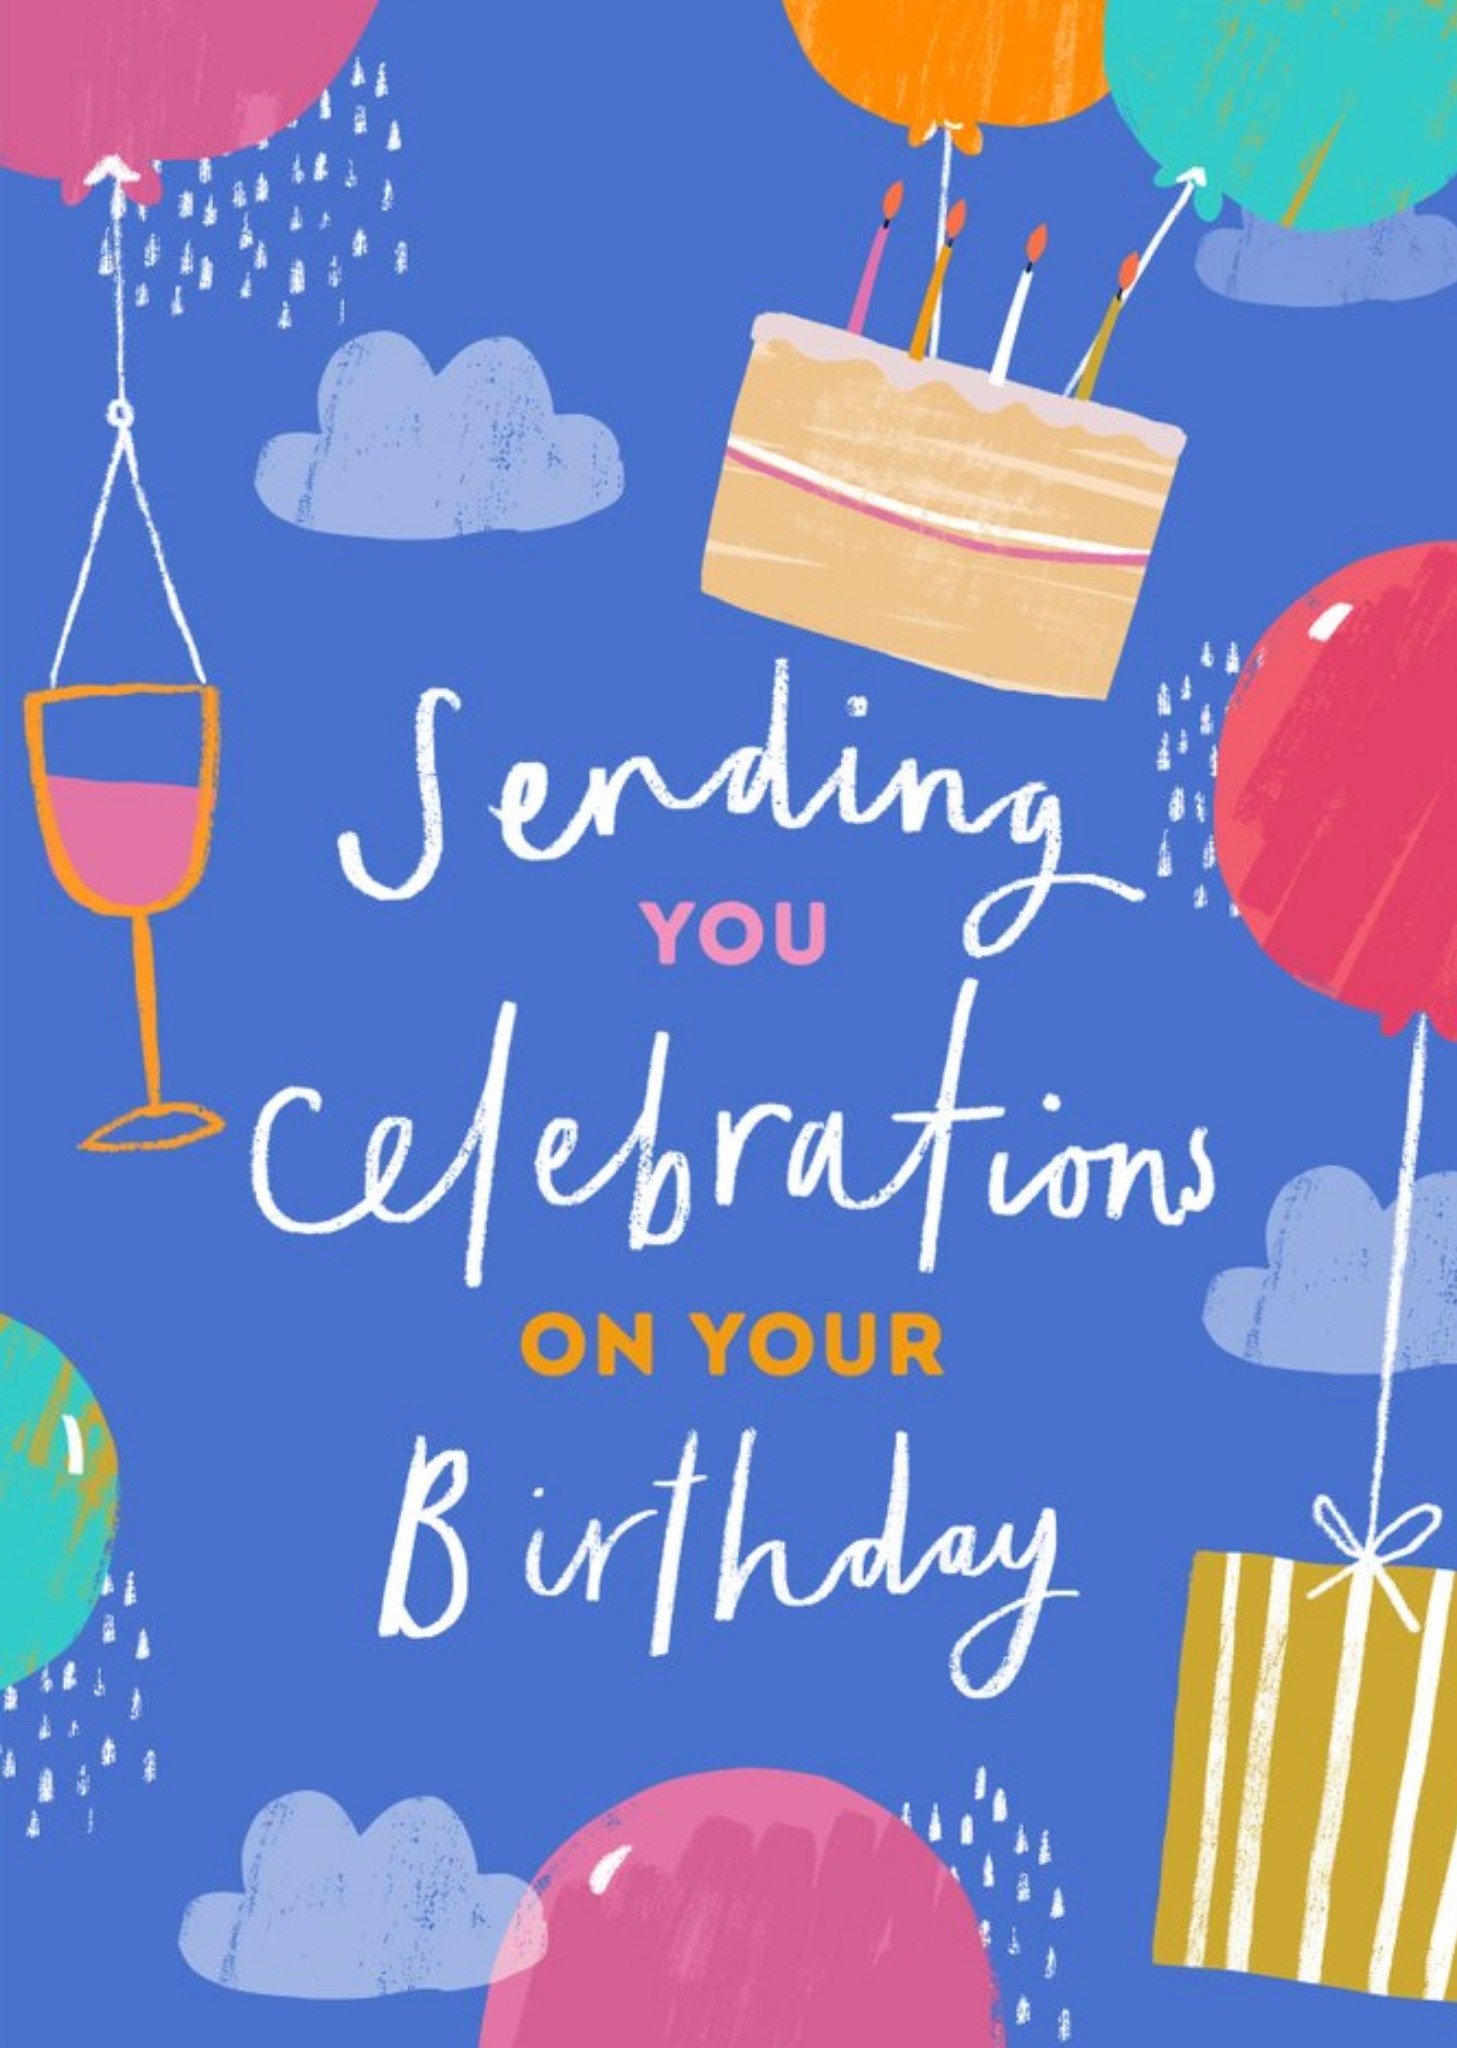 Moonpig Sending You Celebration On Your Birthday Virtual Birthday Card, Large